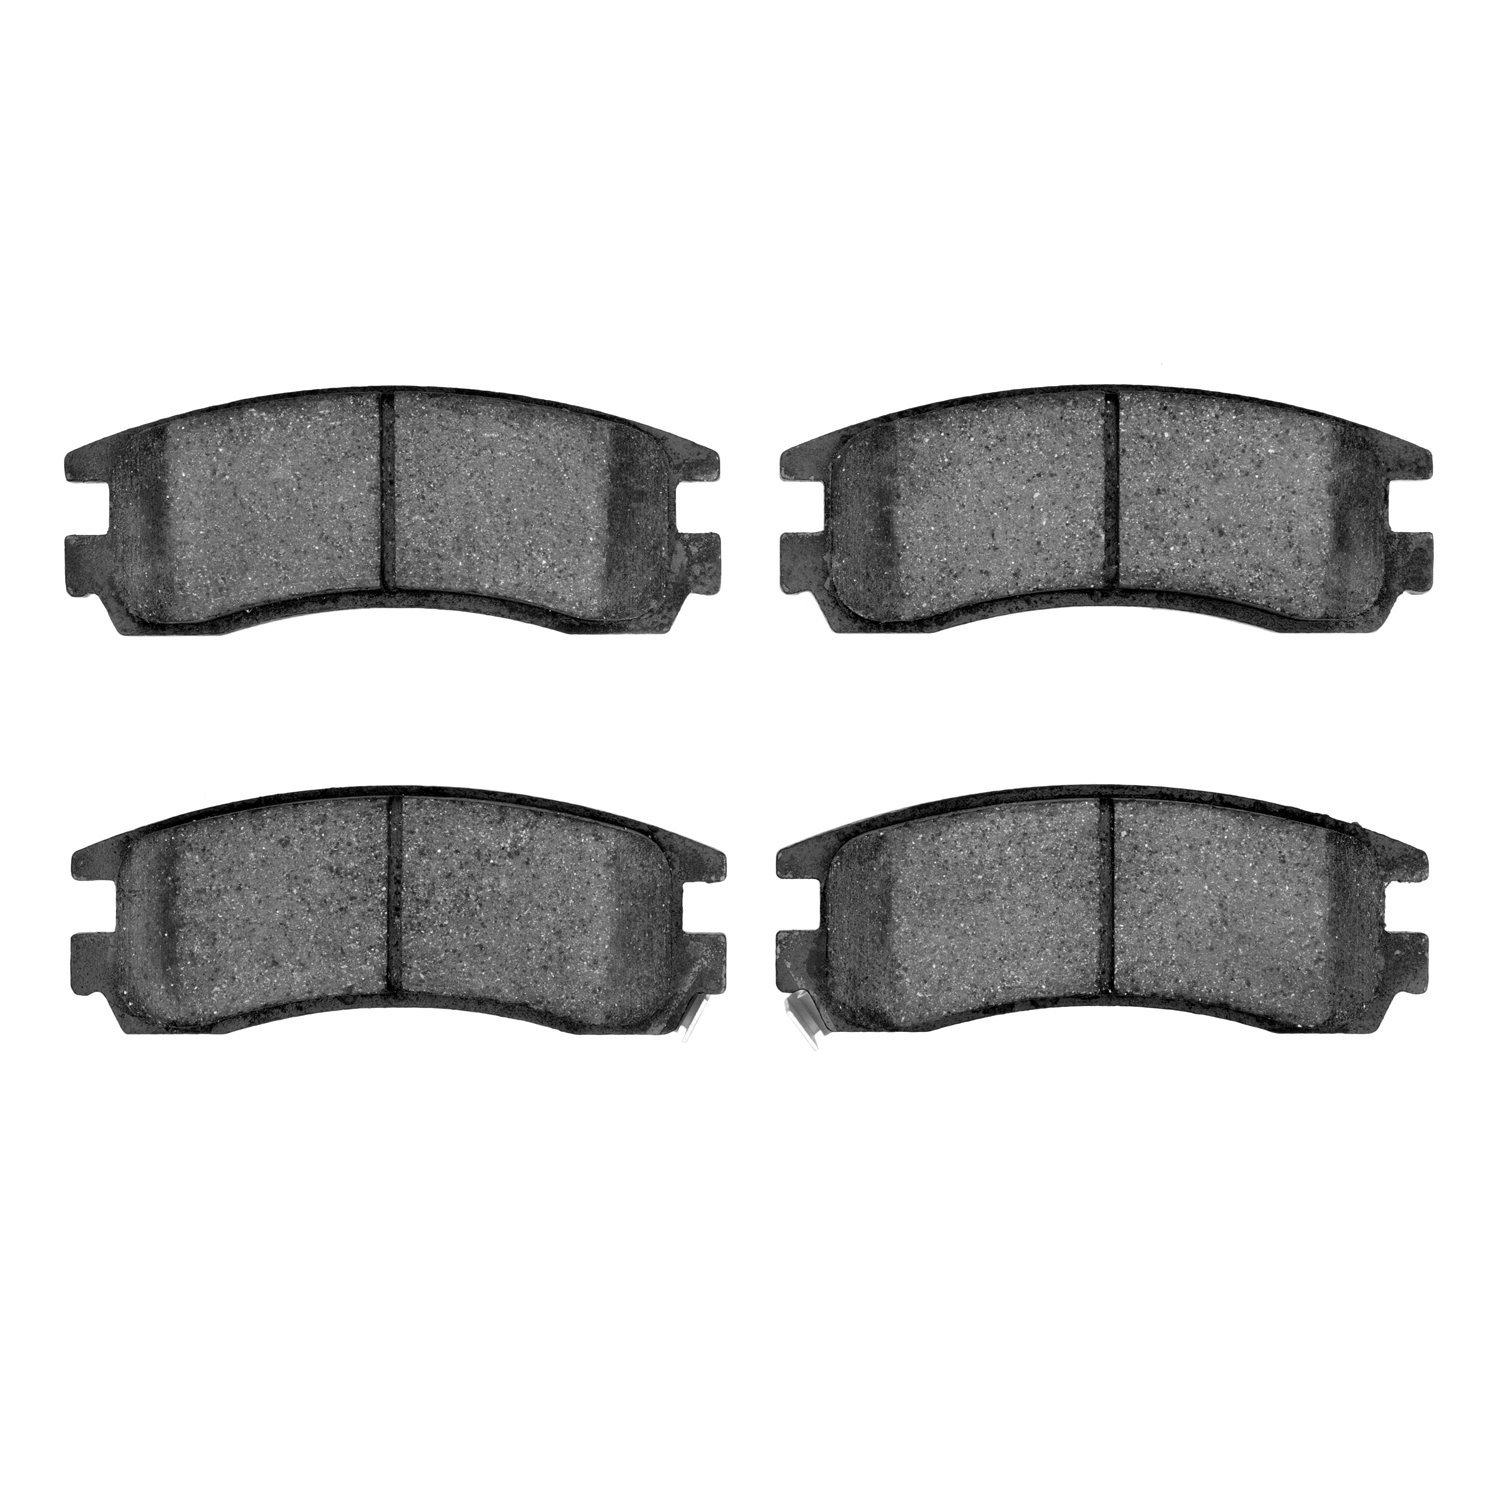 1310-0698-00 3000-Series Ceramic Brake Pads, 1995-2010 Multiple Makes/Models, Position: Rear,Front